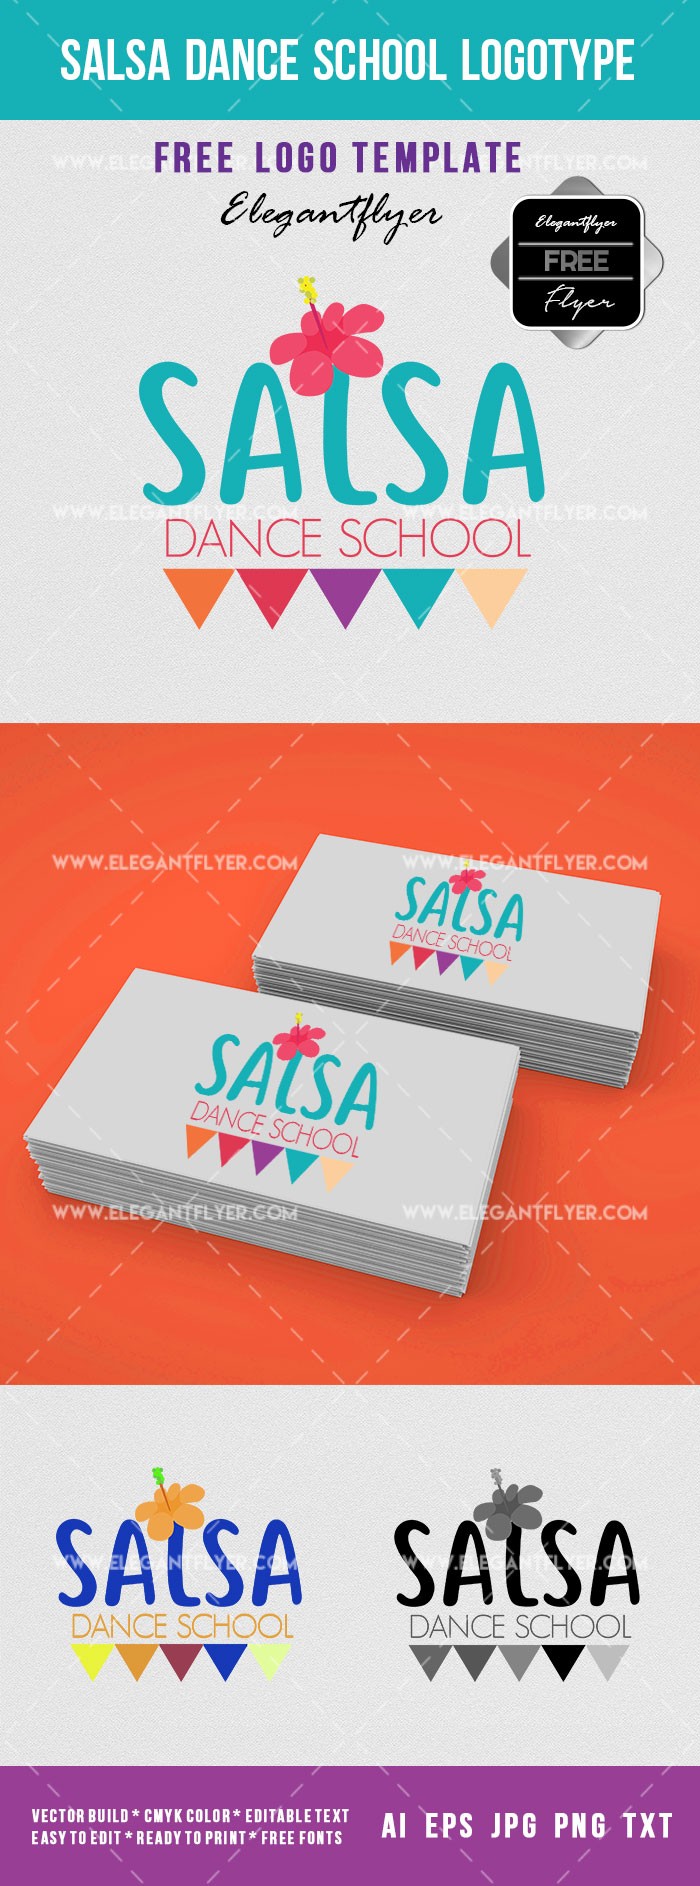 Salsa Dance School Logotype by ElegantFlyer